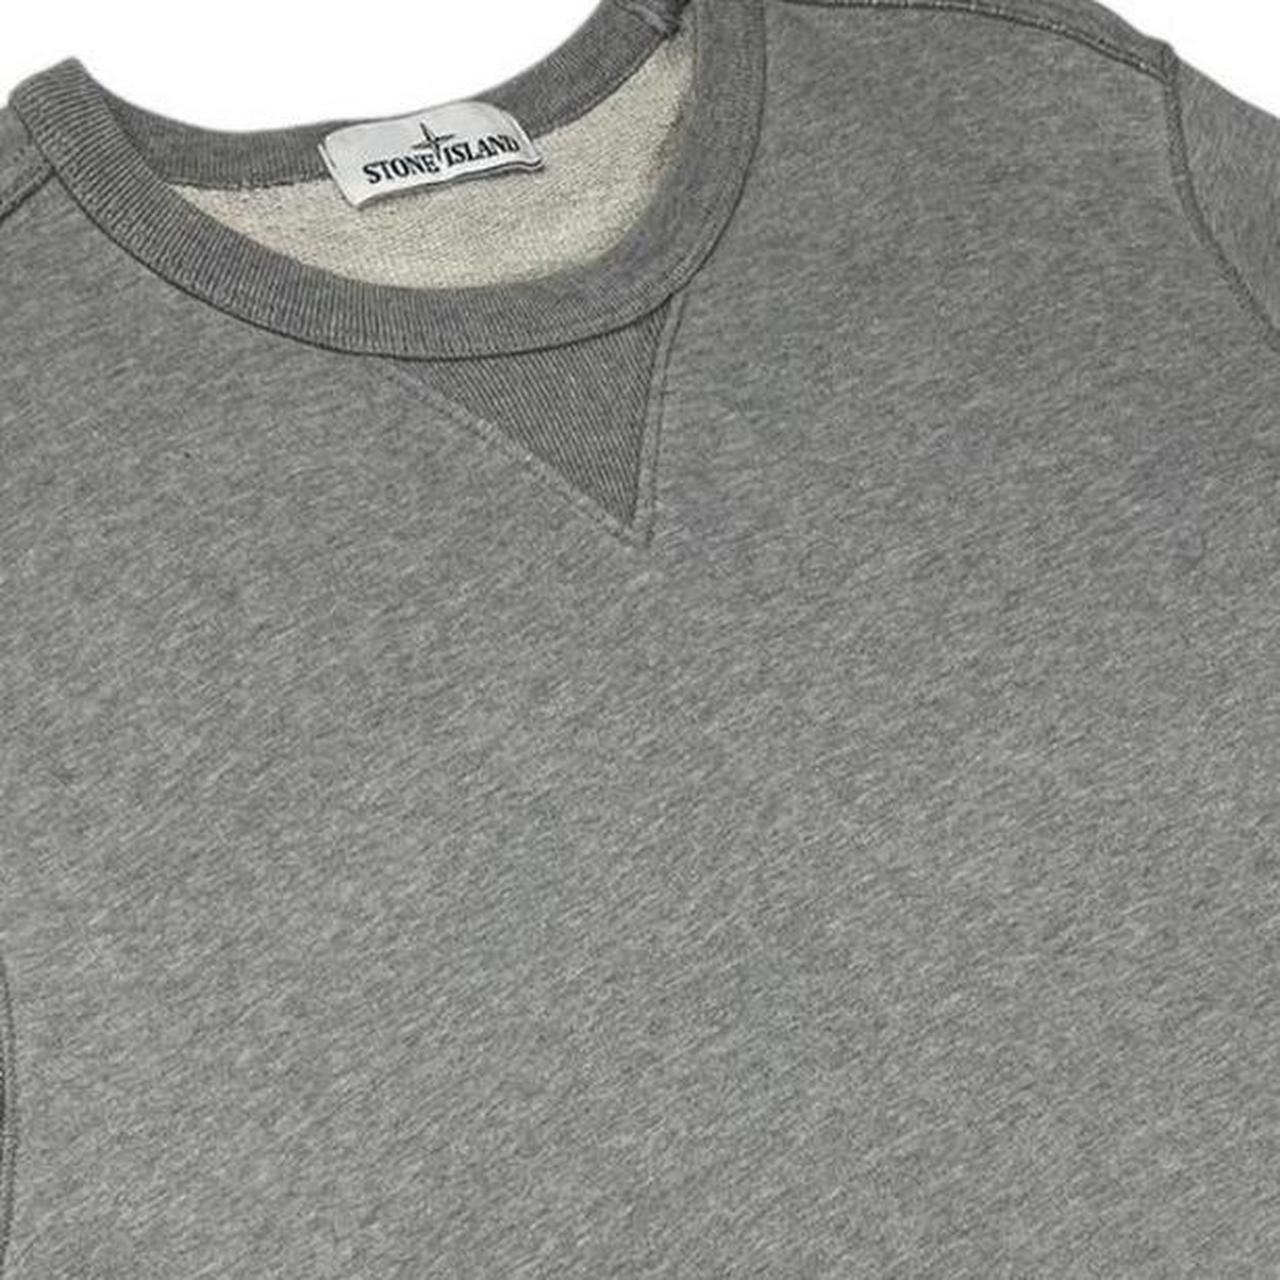 Stone island grey sweatshirt Size M Barely worn... - Depop